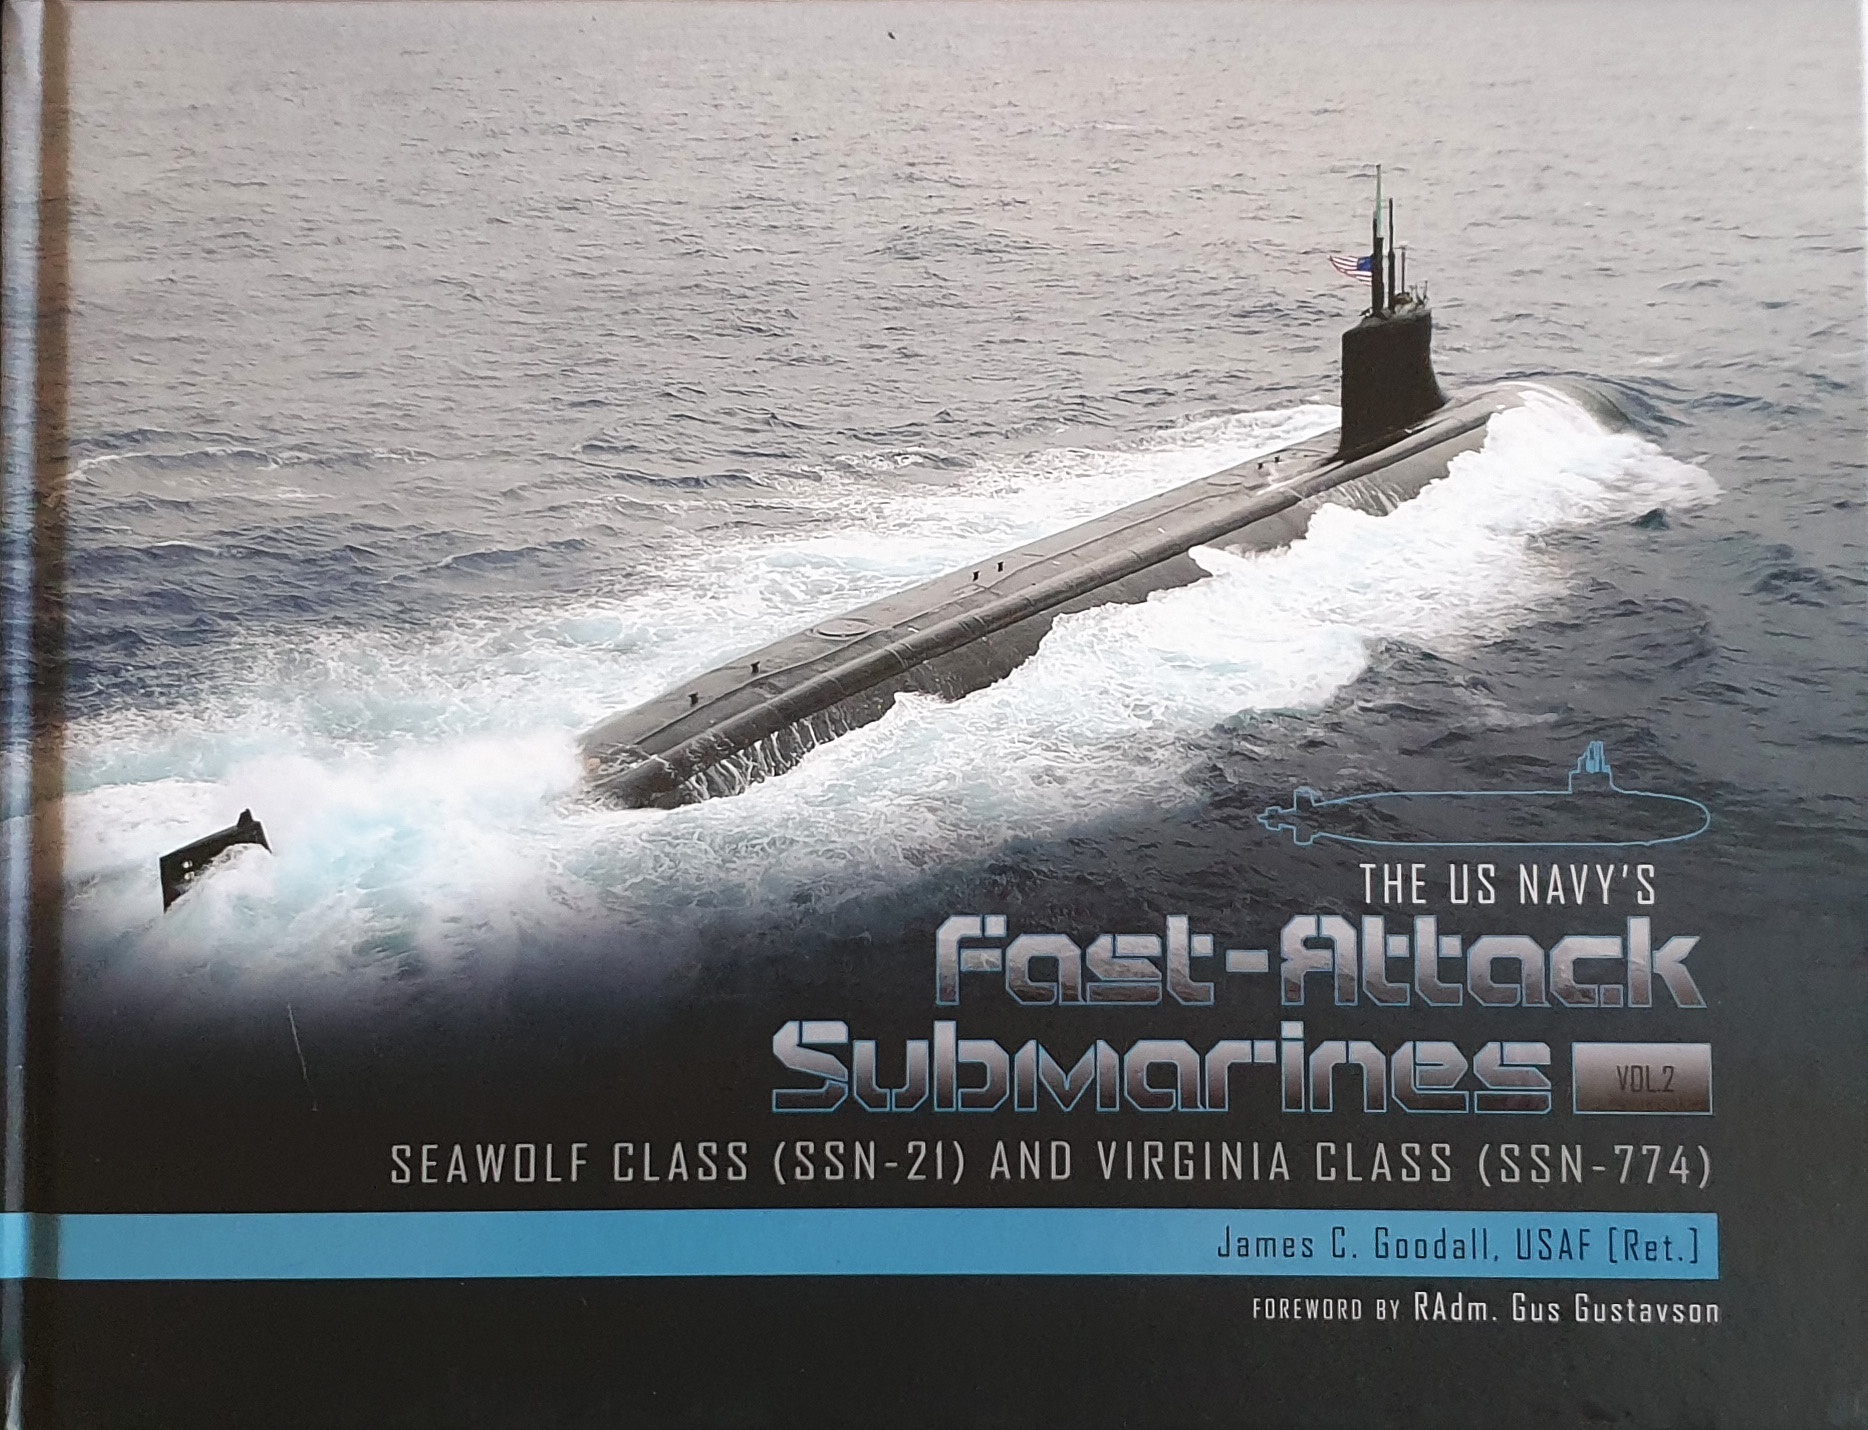 US Navy's Fast-Attack Submarines, Vol. 2: Seawolf Class SSN-21-Virginia Class SSN-774